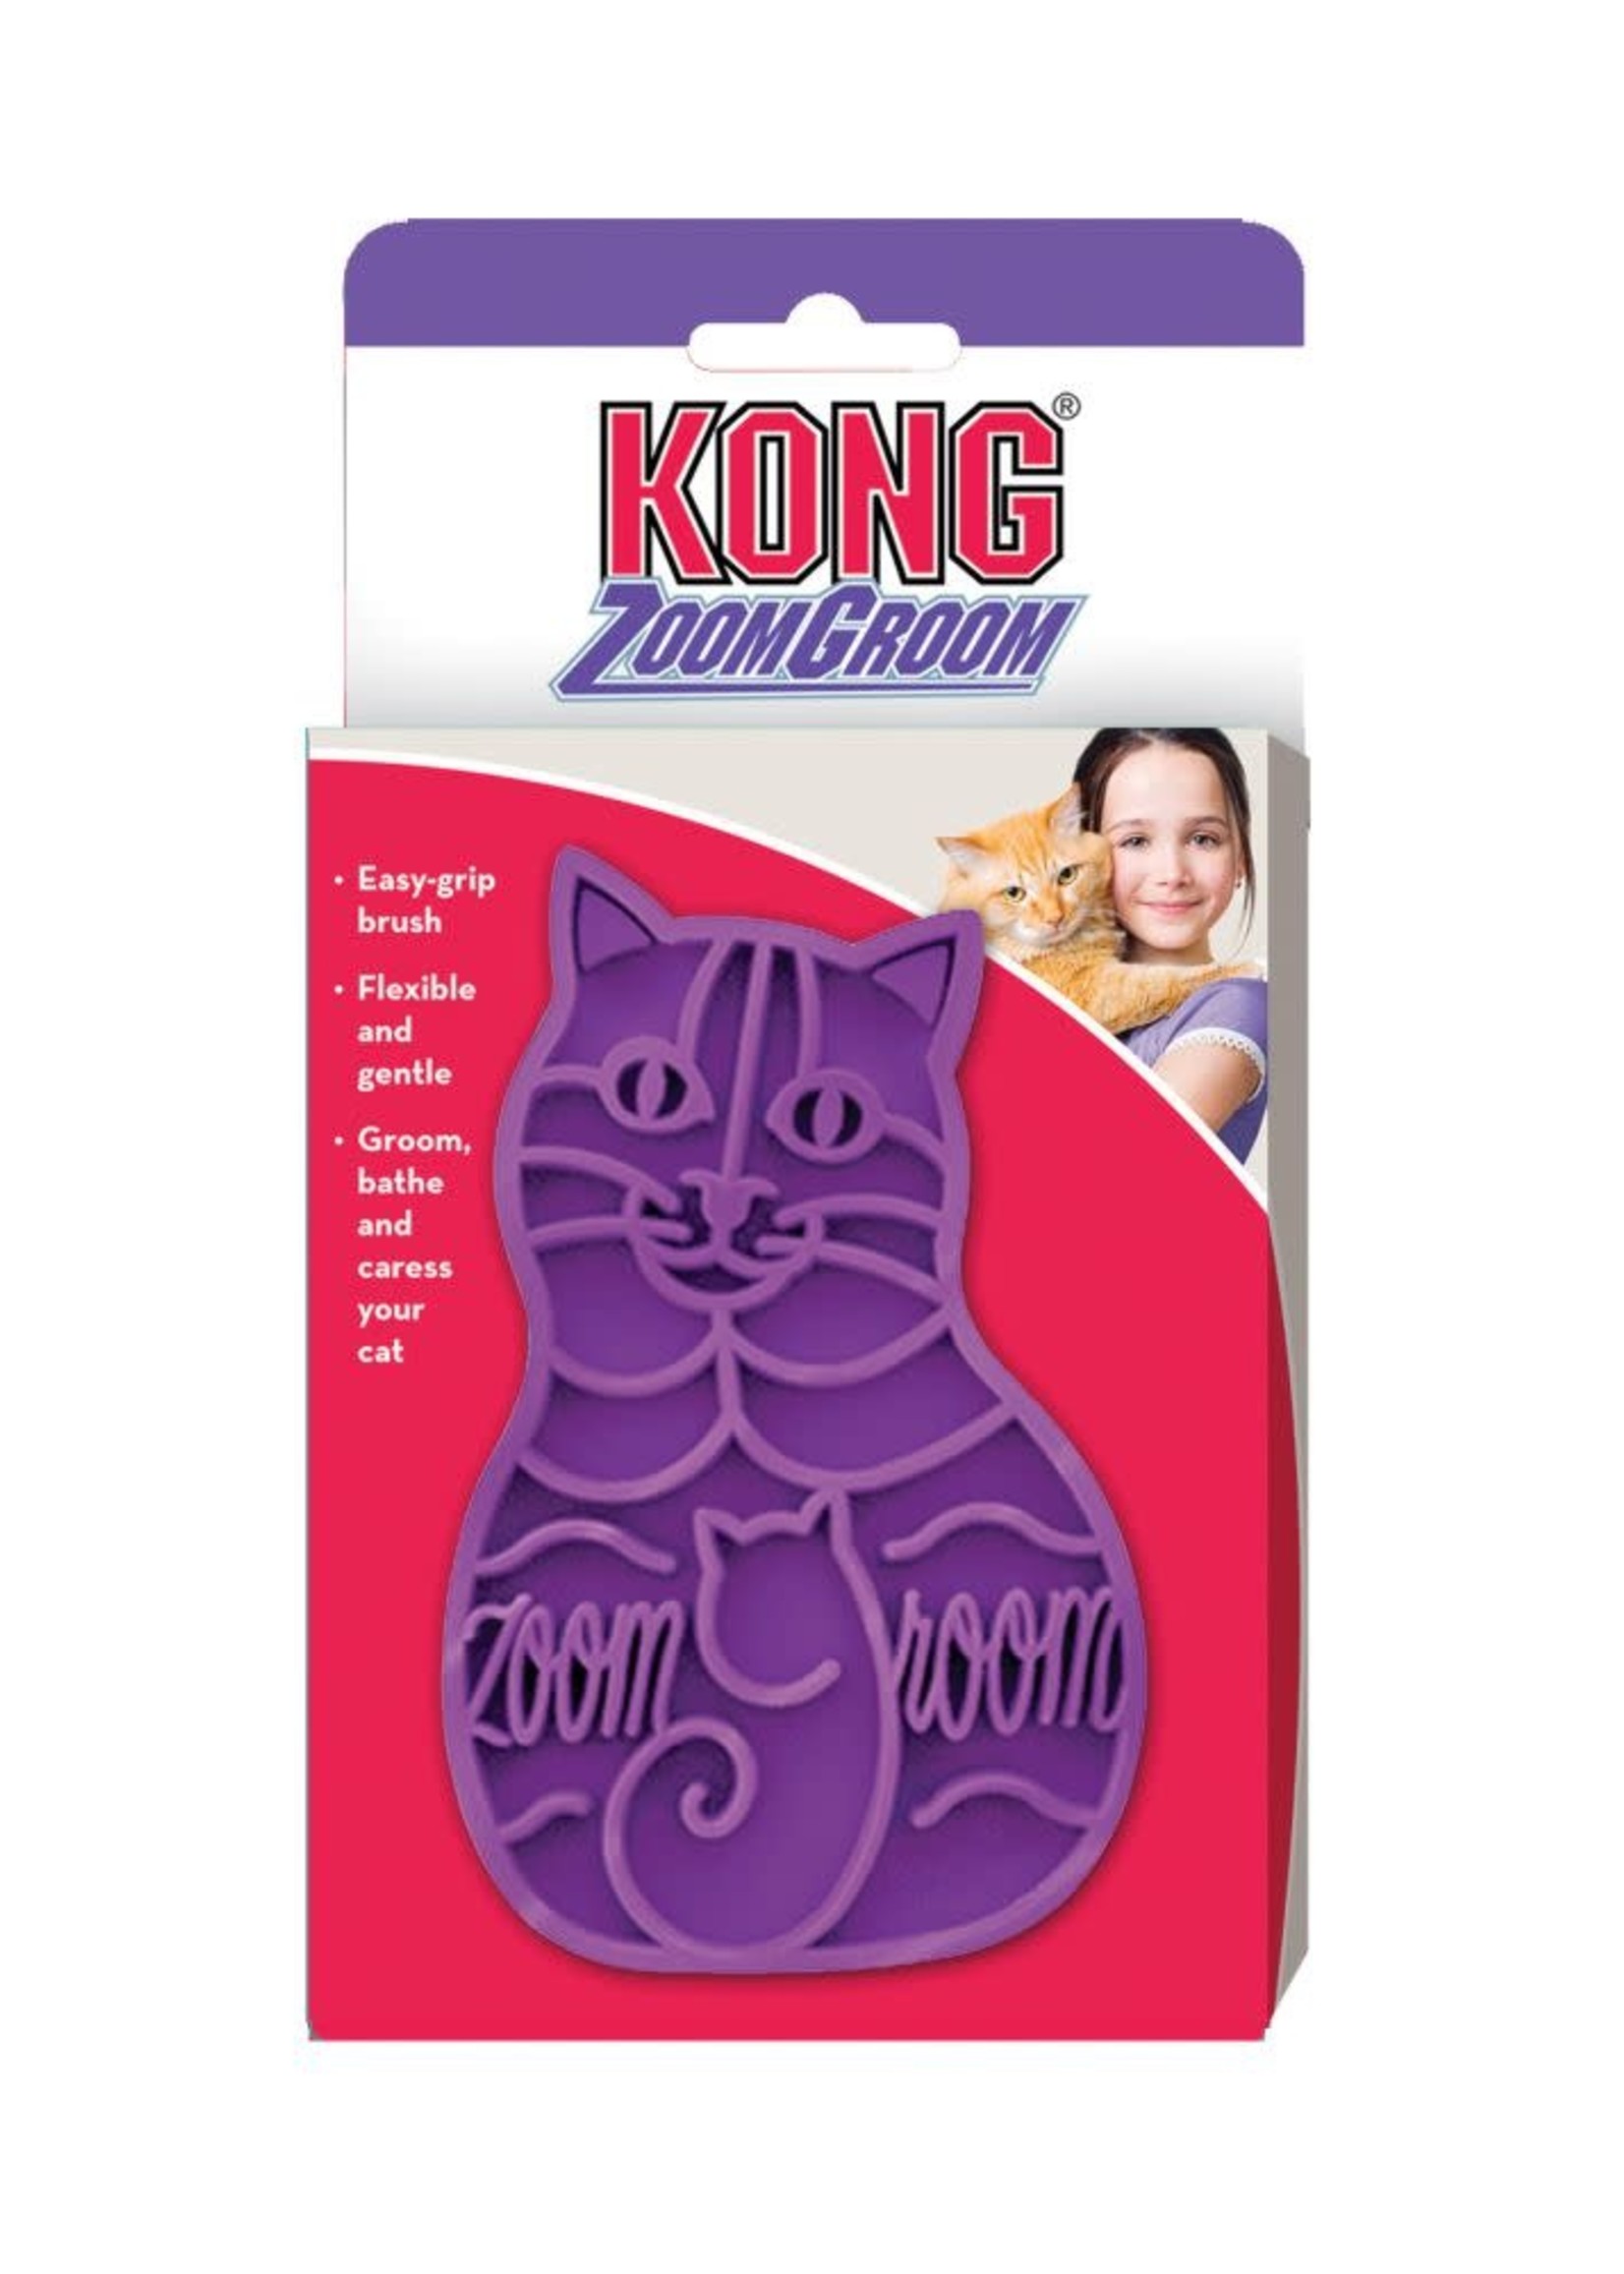 KONG KONG Zoom Groom Cat Brush